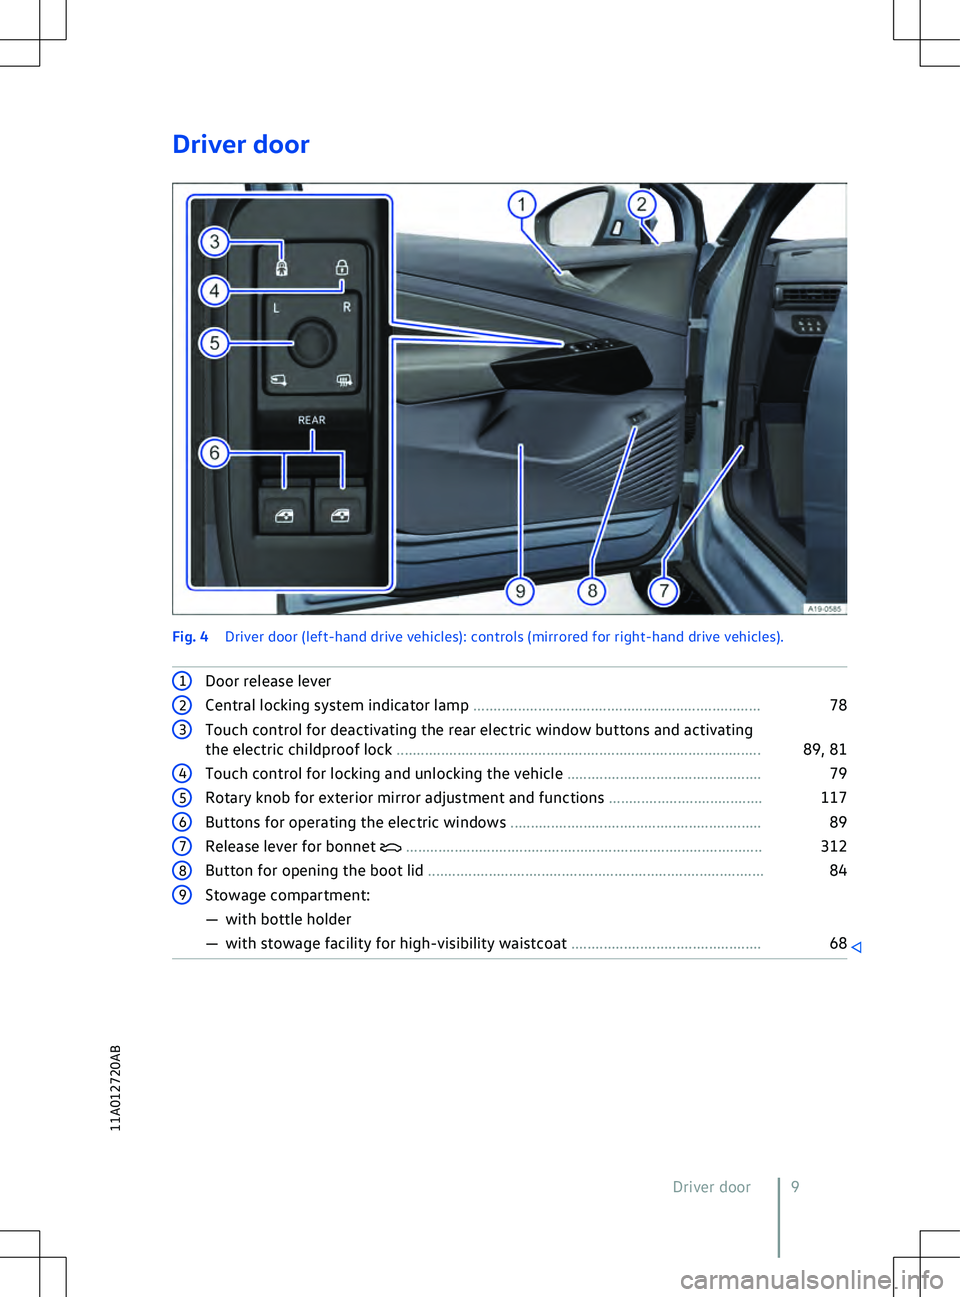 VOLKSWAGEN ID.4 2020  Owner´s Manual Driver door
Fig. 4 
Driv er door (left-hand drive vehicles): controls (mirrored for right-hand drive vehicles). 1
Door release lever 2
Central locking system indicator lamp  ..........................